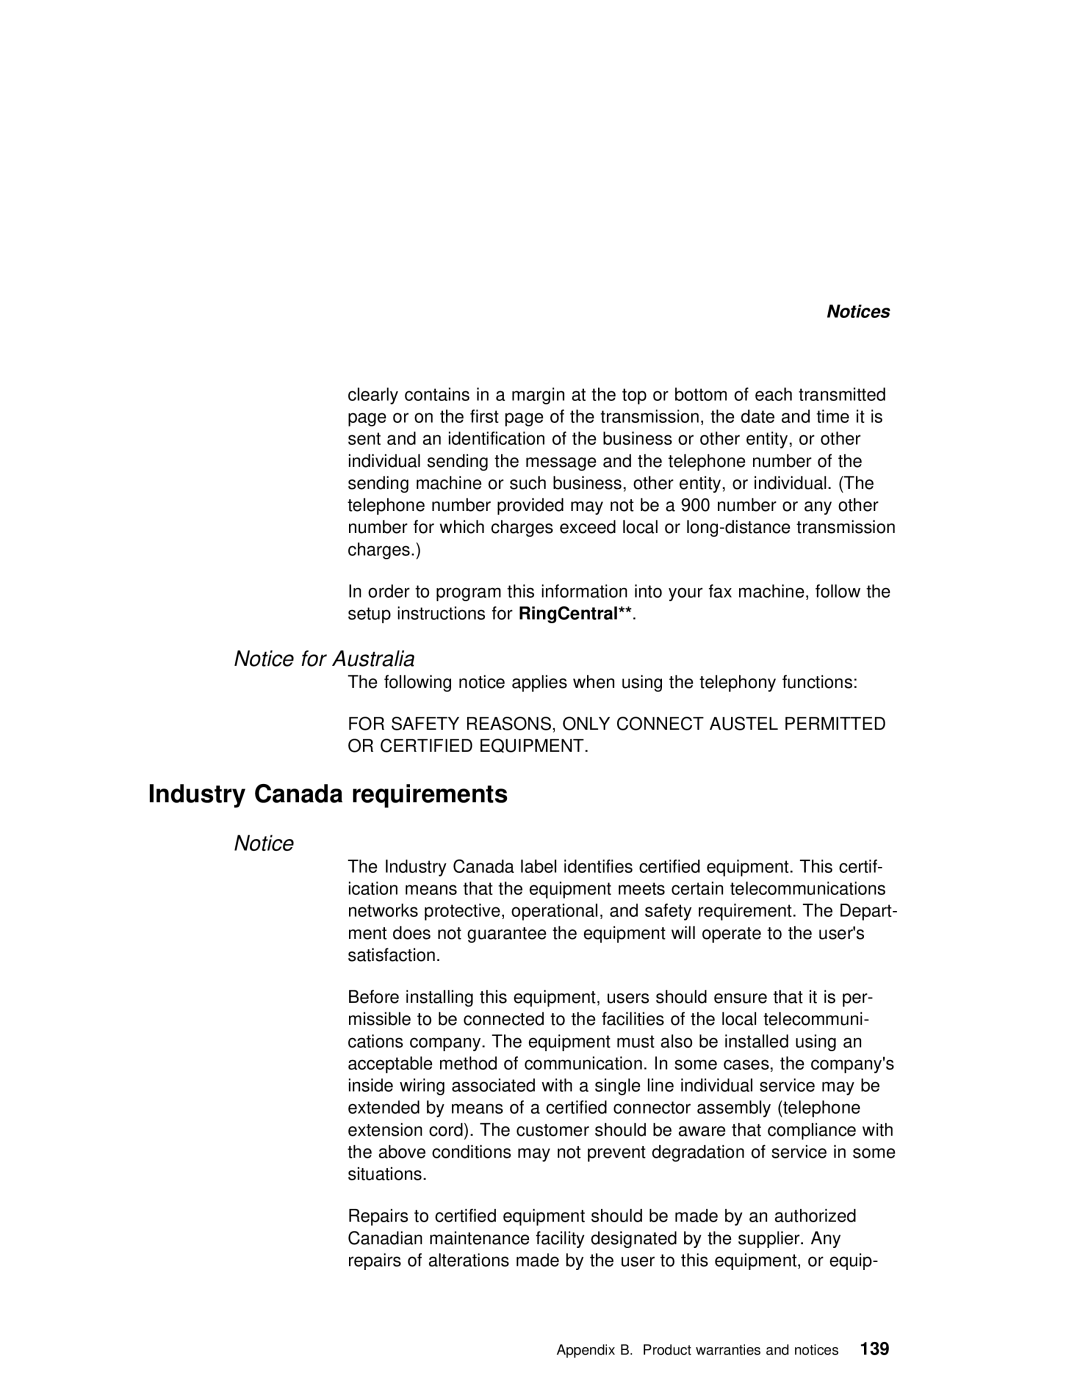 IBM i Series 1300, i Series 1200 manual Industry Canada requirements, Australia 